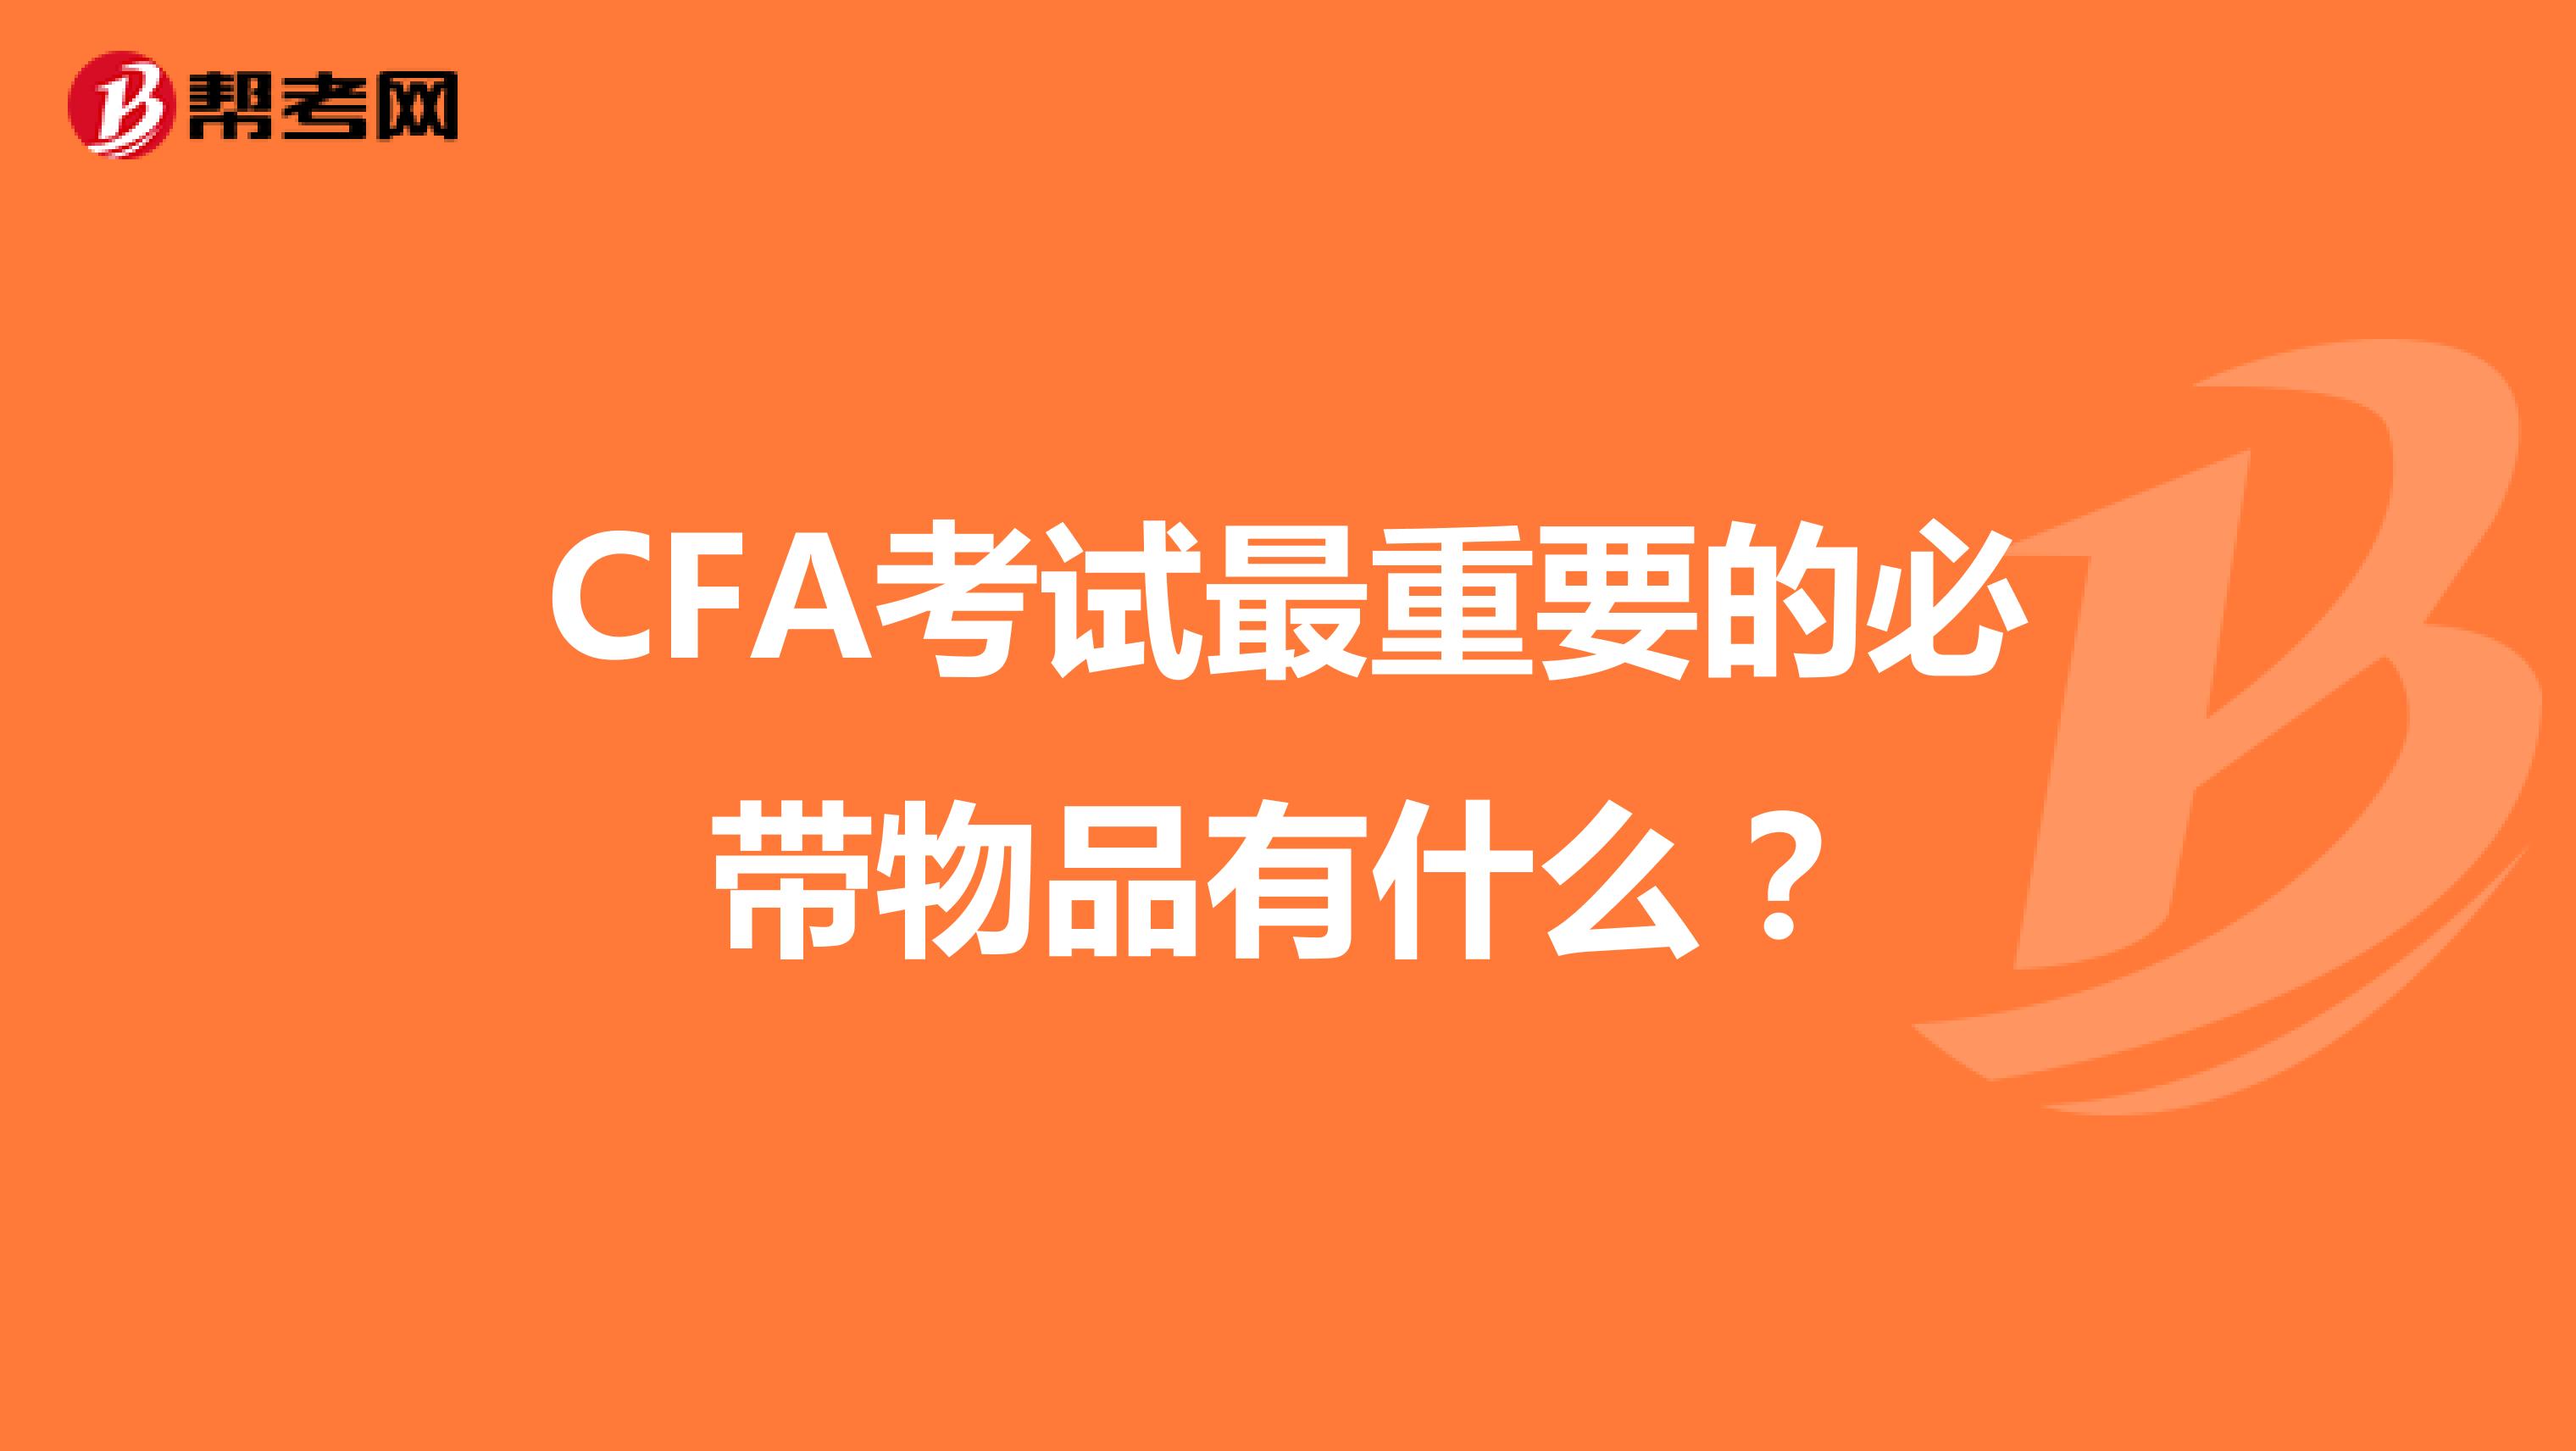 CFA考试最重要的必带物品有什么？